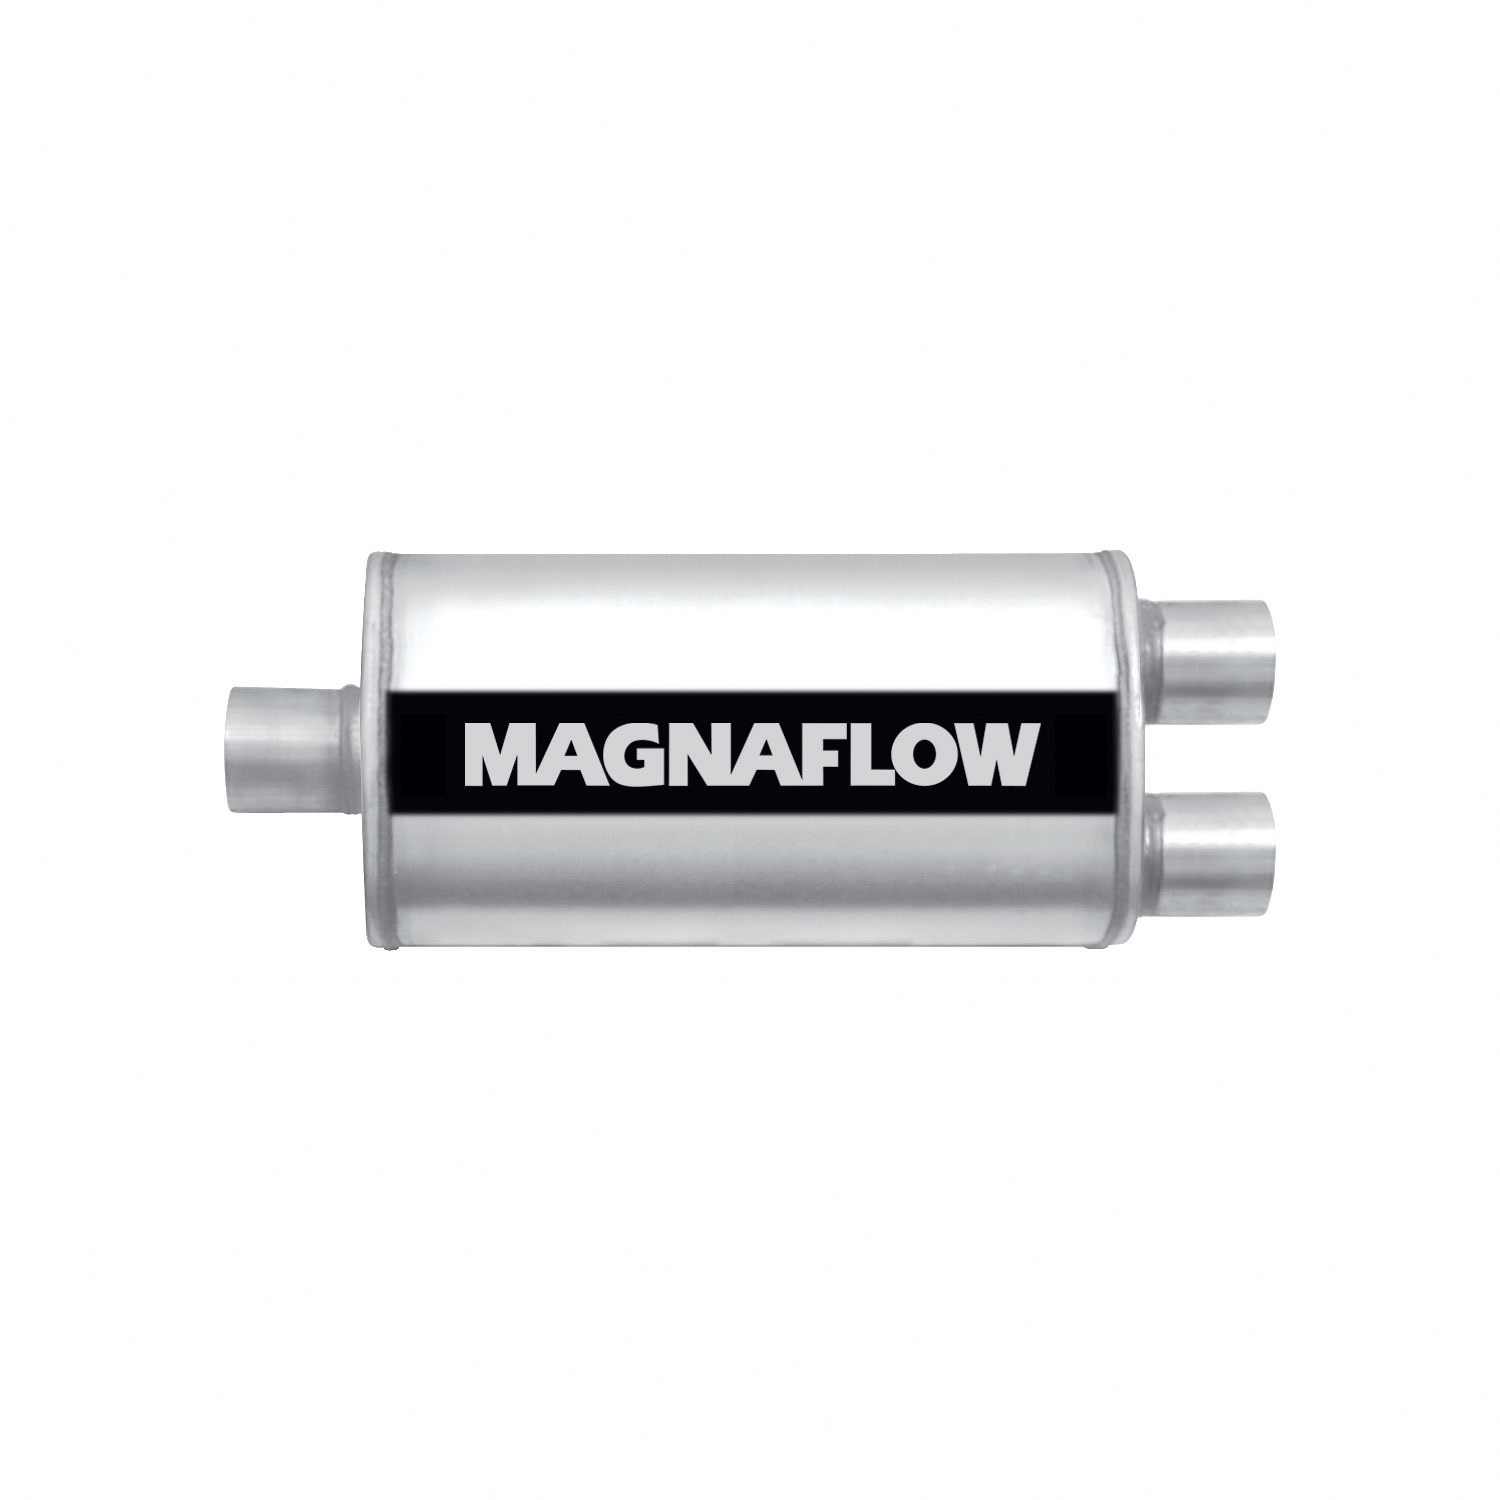 Magnaflow Performance Exhaust Magnaflow Performance Exhaust 12148 Stainless Steel Muffler